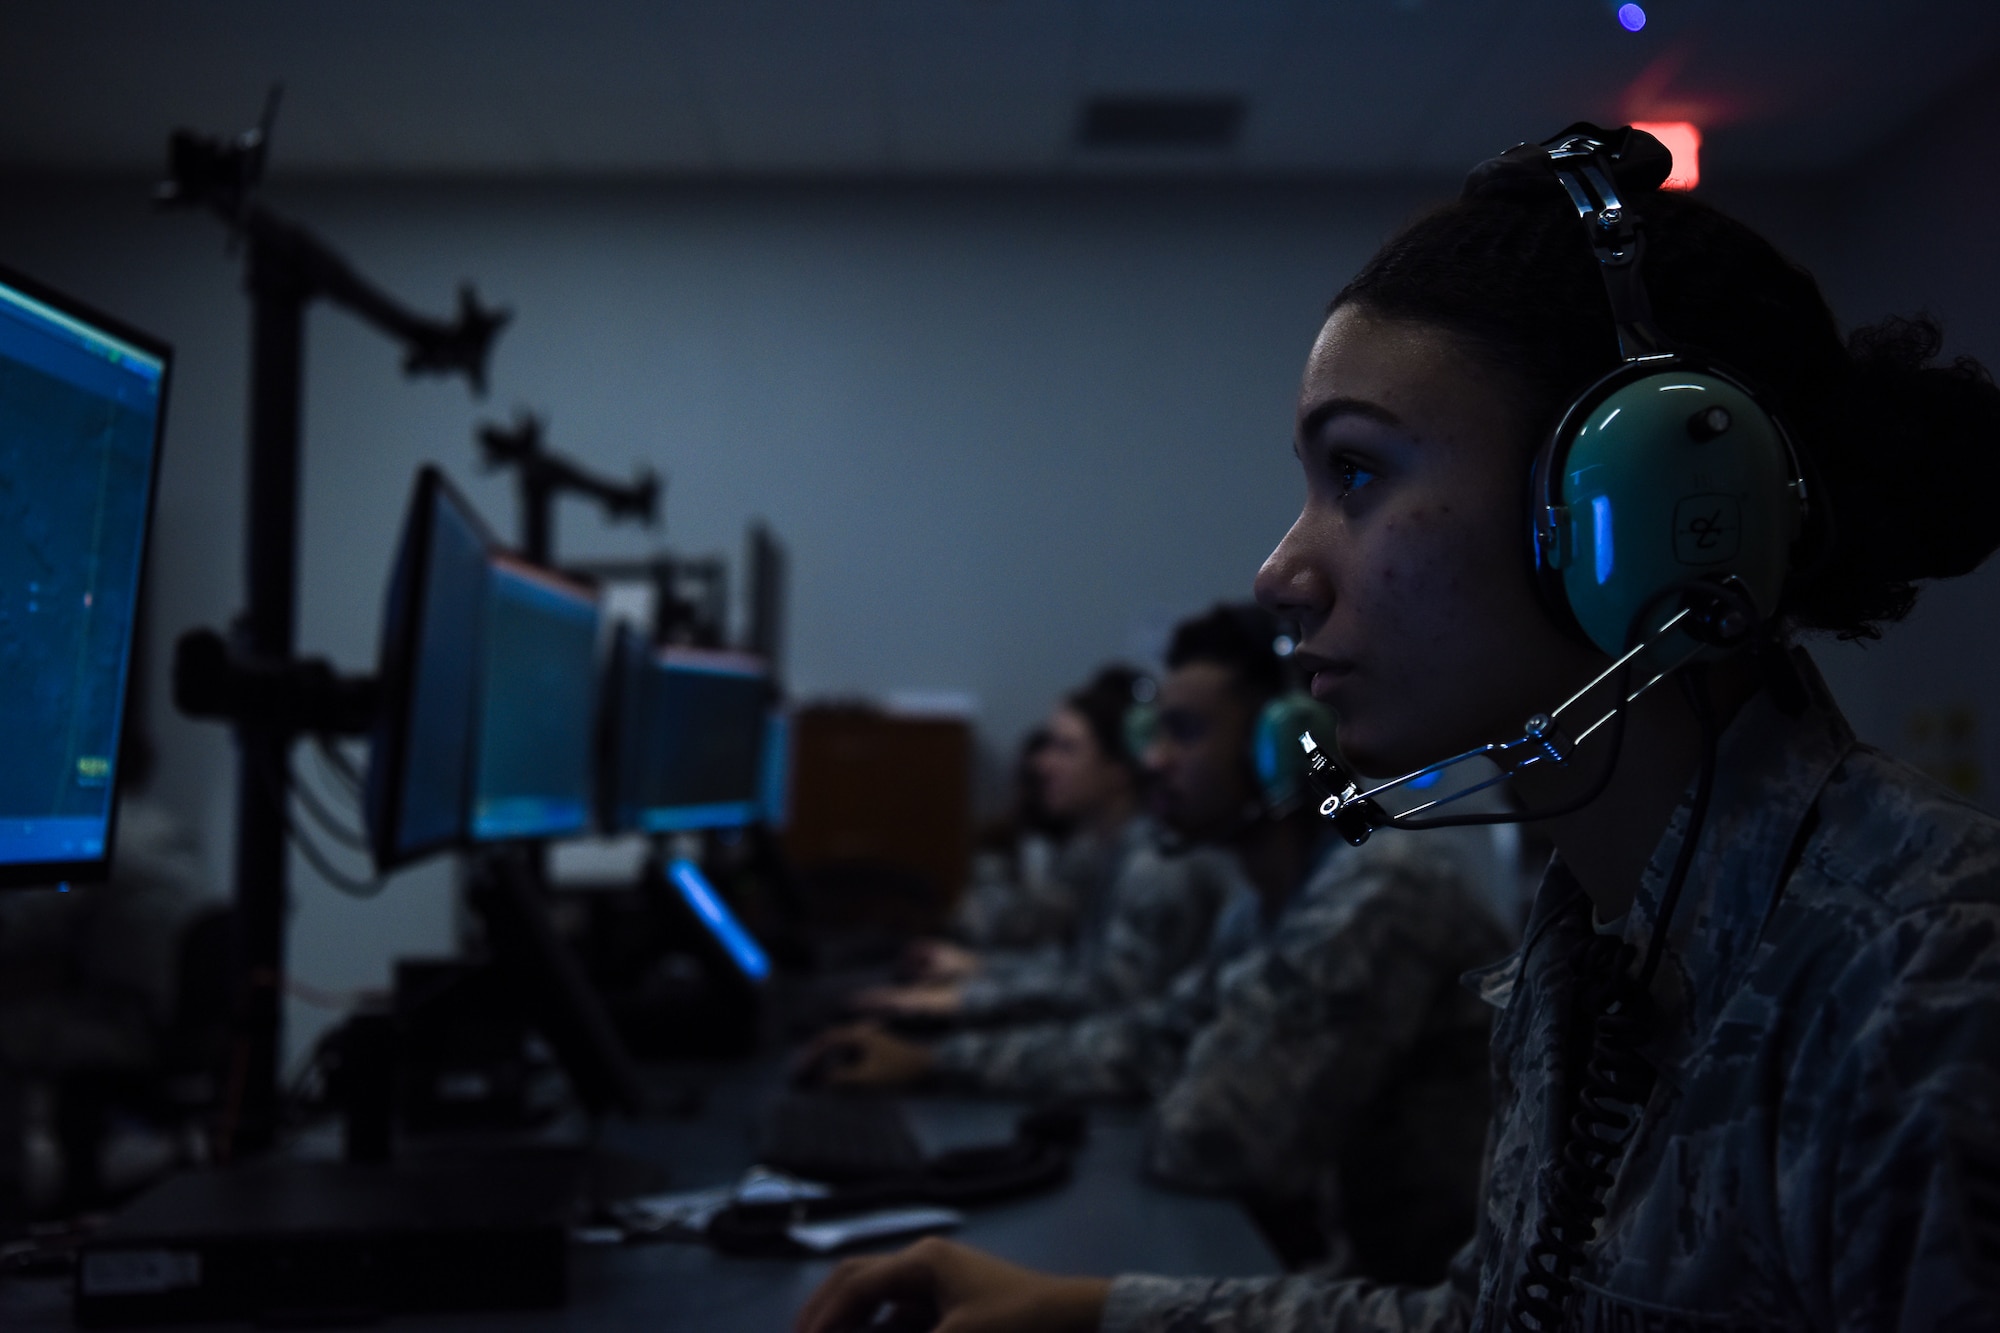 Senior Airman Briana Hightower, 607th Air Control Squadron weapons simulation technician, operates a flight simulator during training, Sept. 21, 2018 at Luke Air Force Base, Ariz.